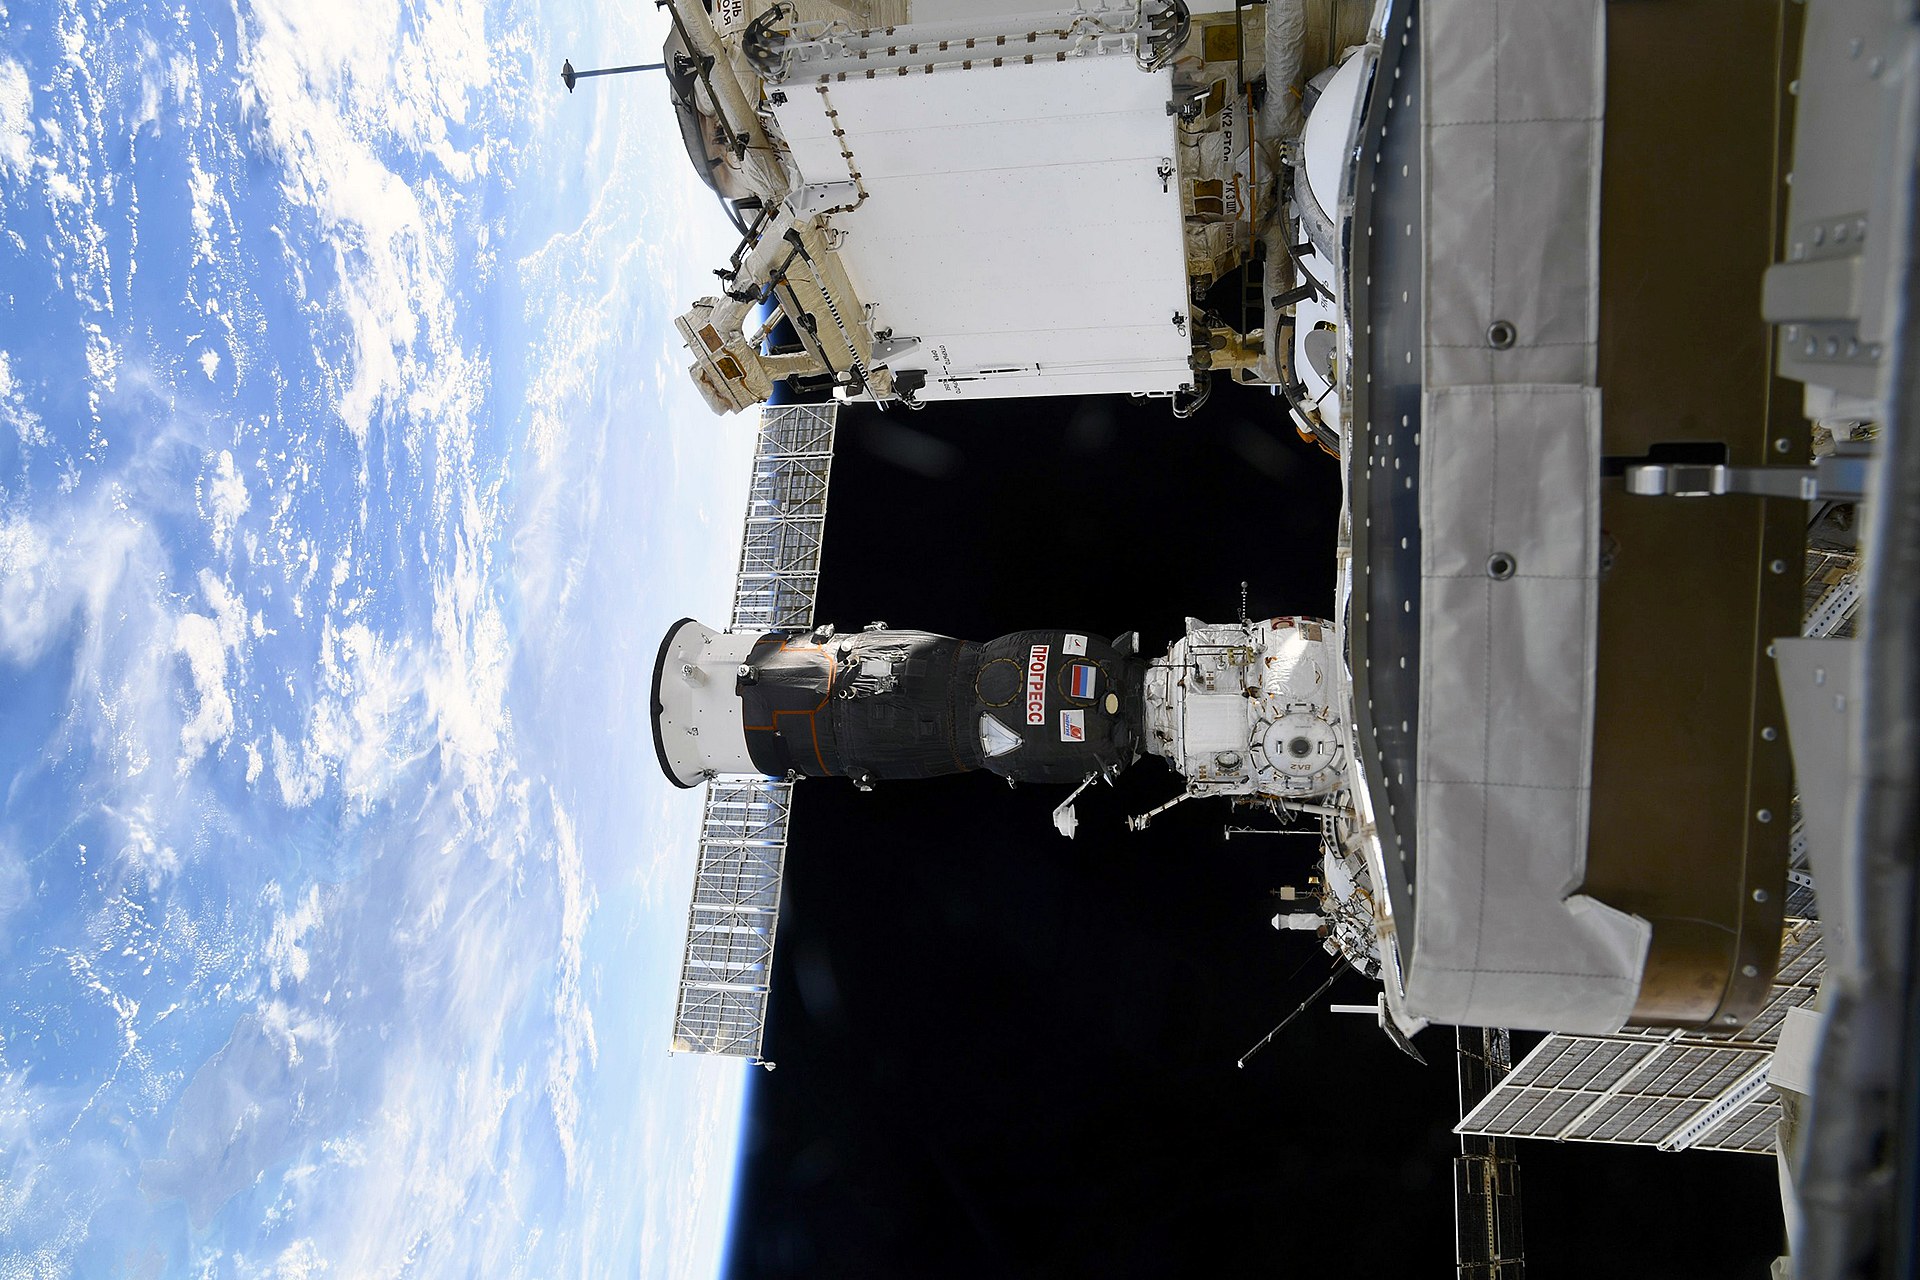 Progress-MS-13-Frachter am russischen Segment der ISS